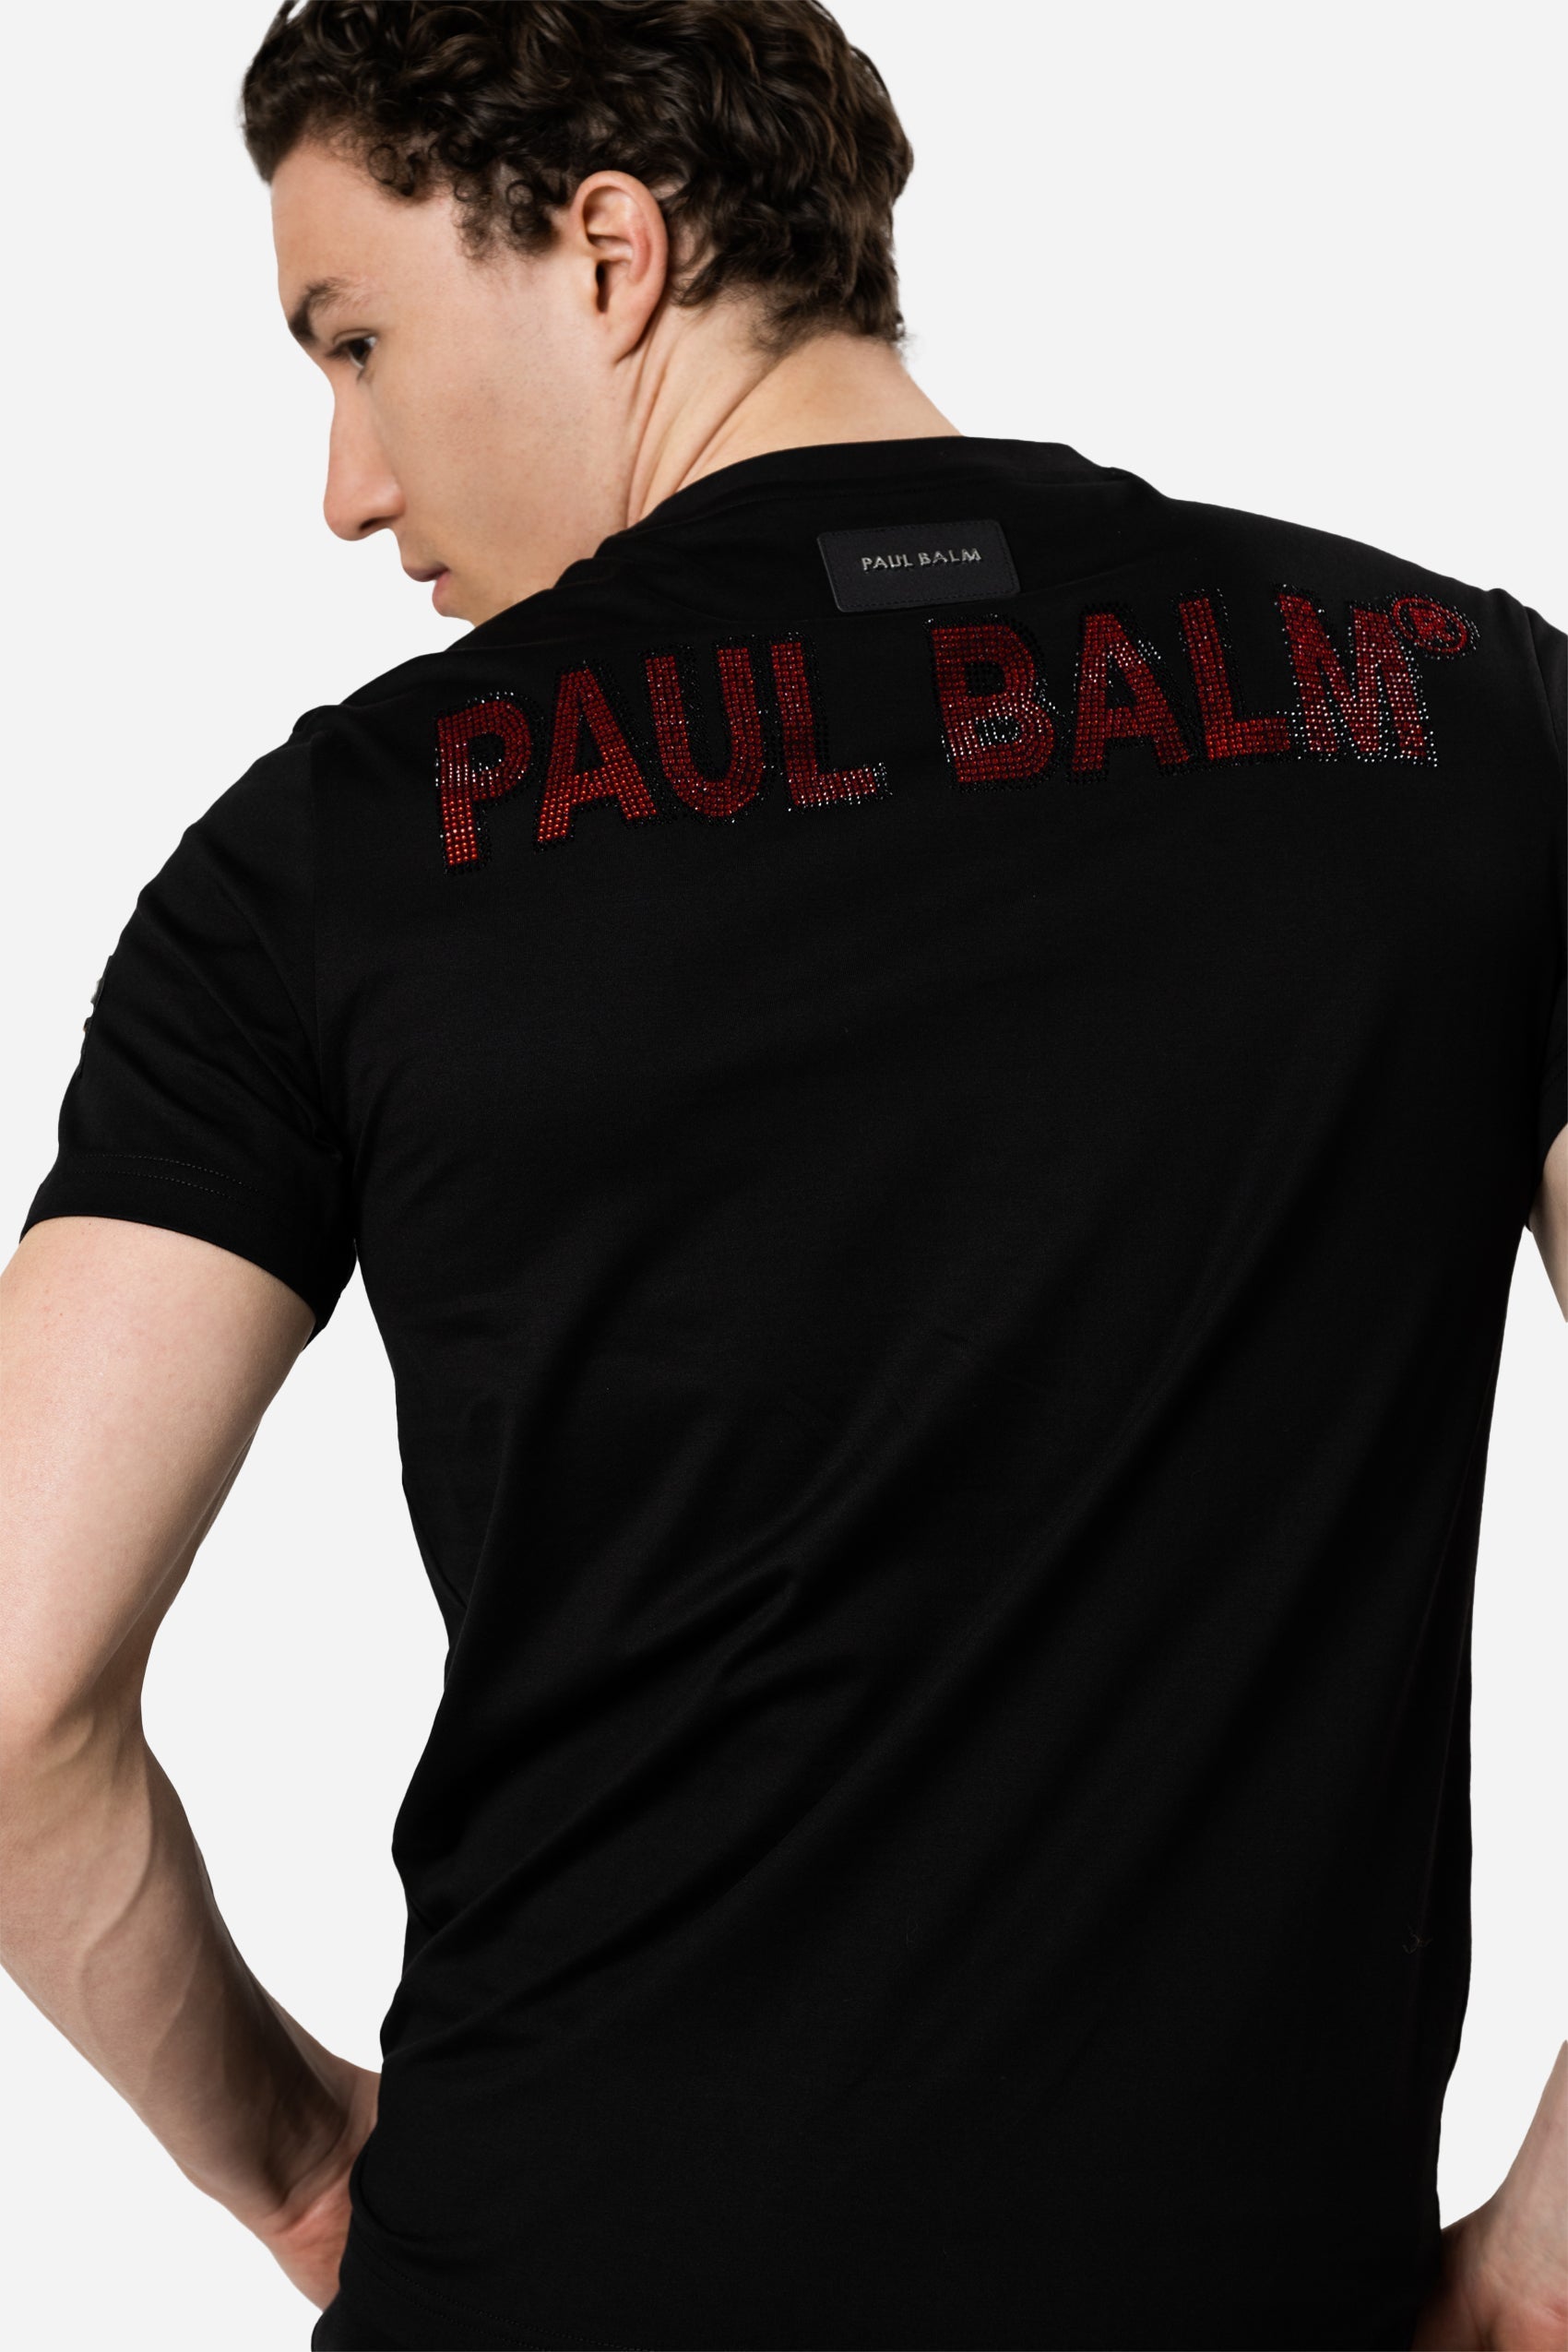 Crystal Yuki Boss T-Shirt - Limited to 300 - PAUL BALM WORLD